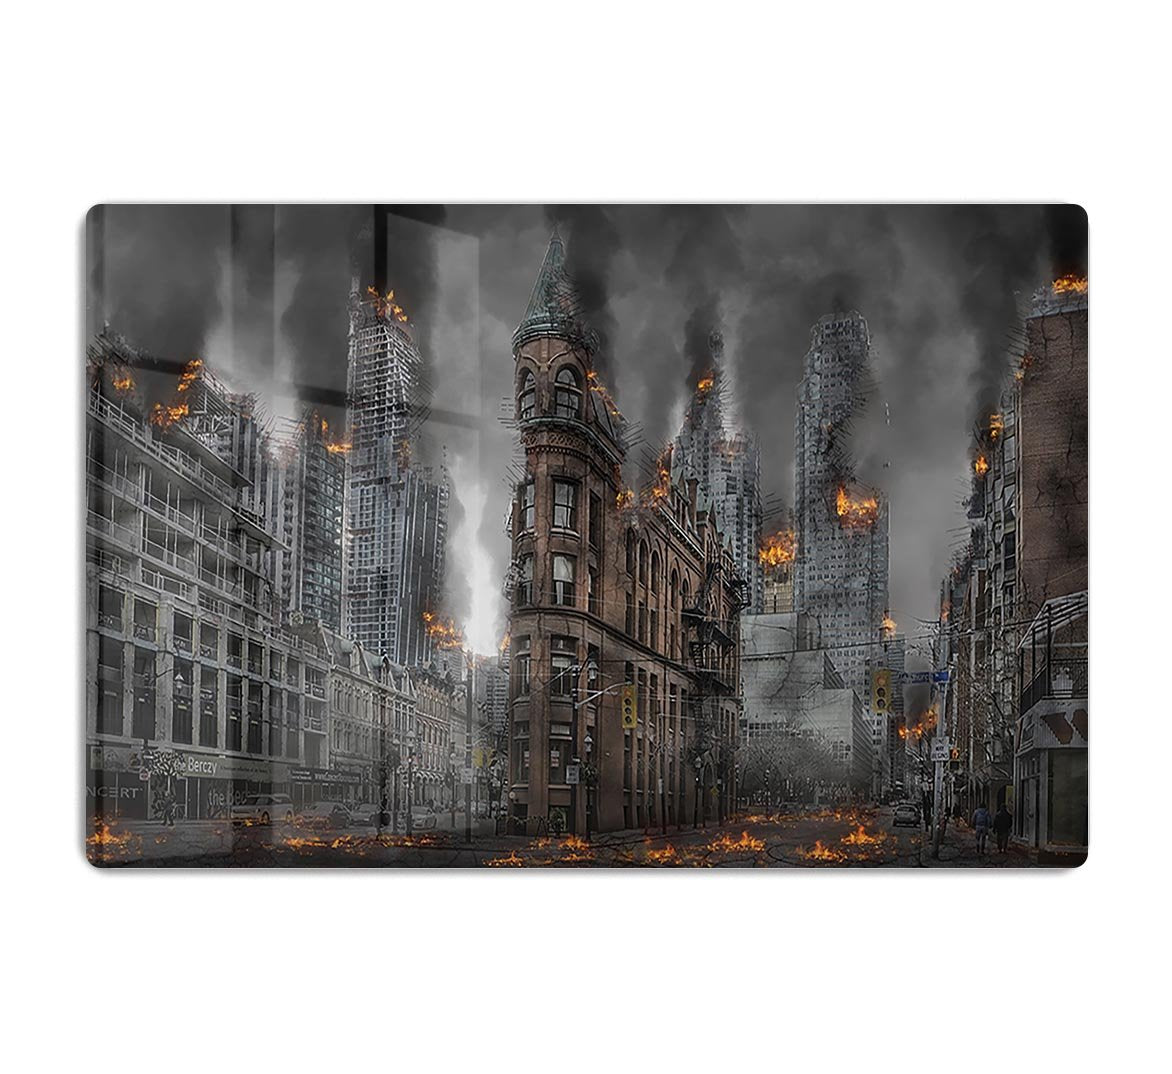 Apocalypse City HD Metal Print - Canvas Art Rocks - 1